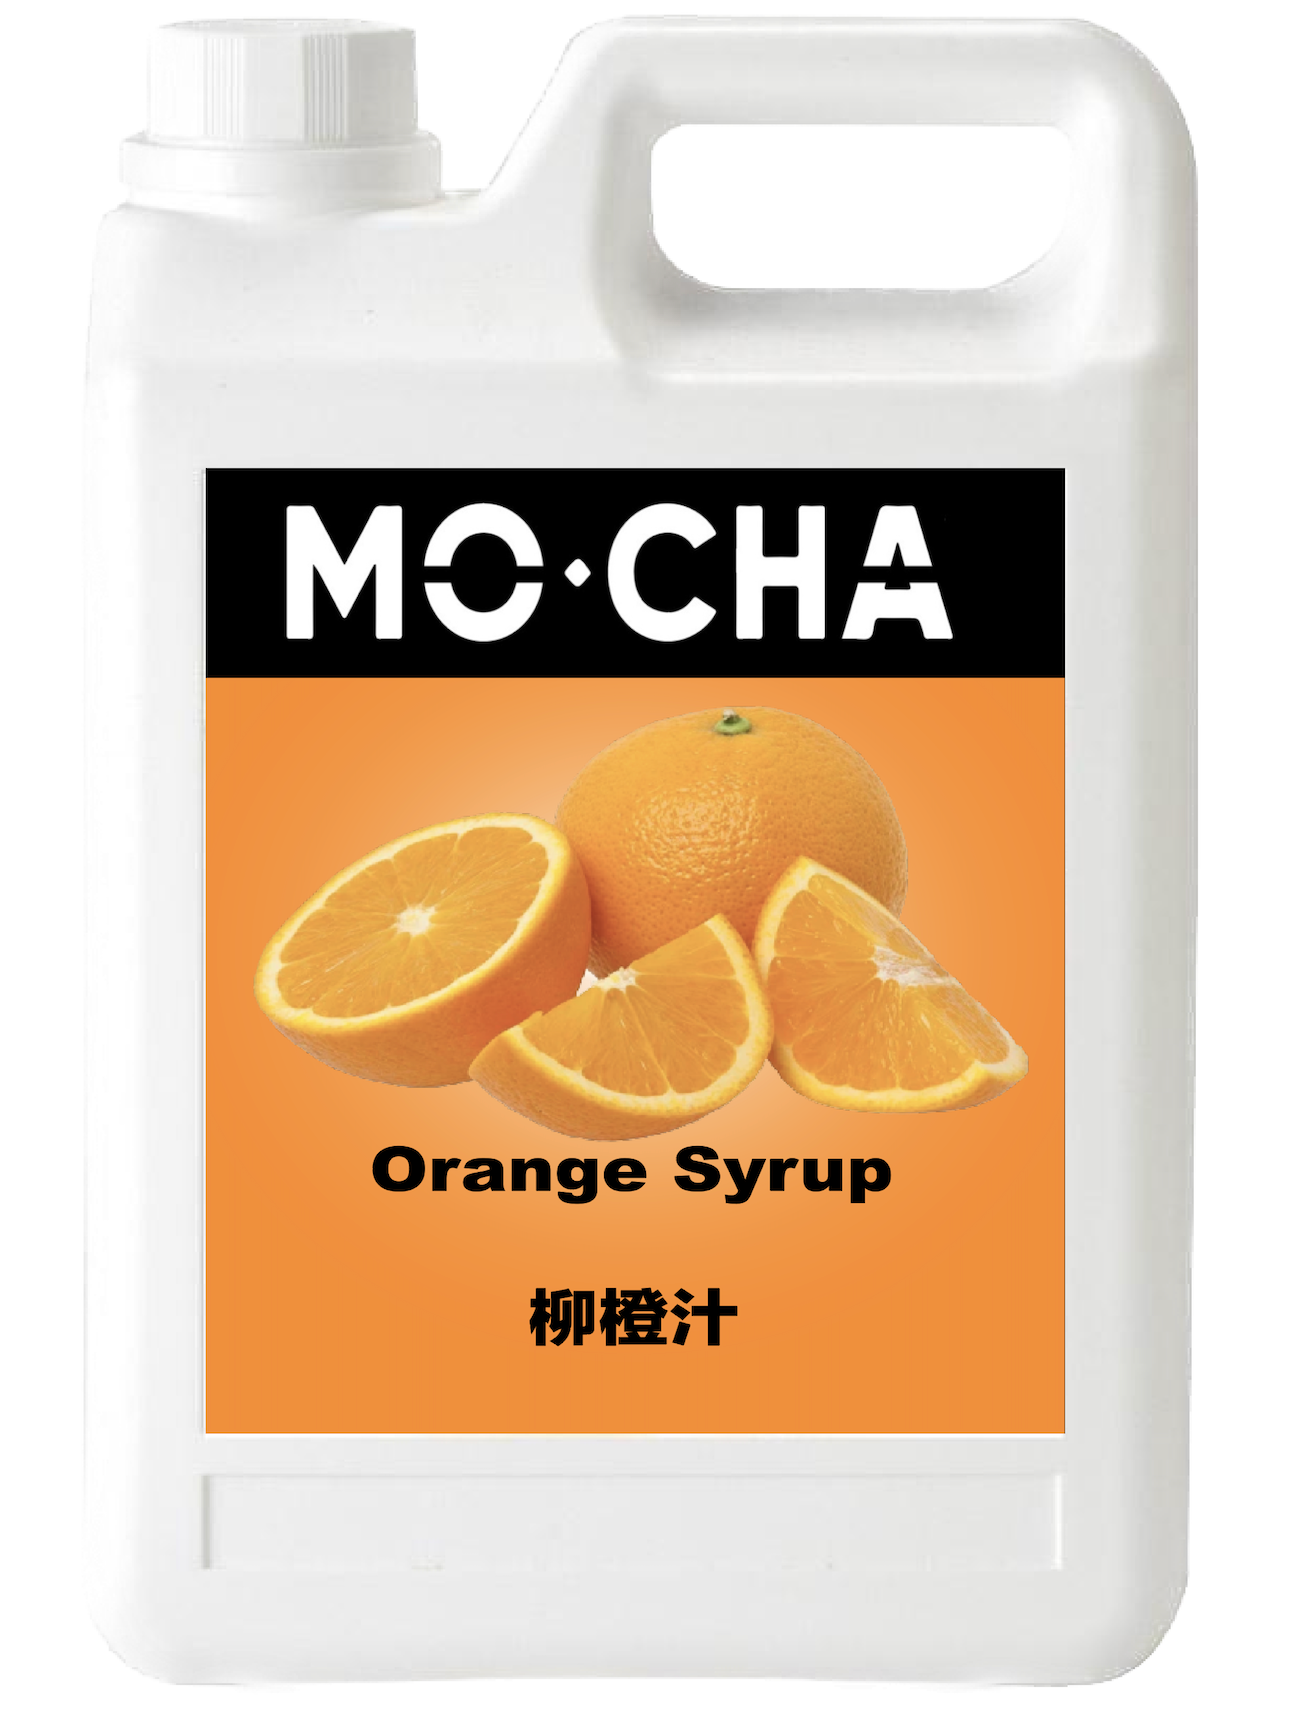 California Orange Syrup